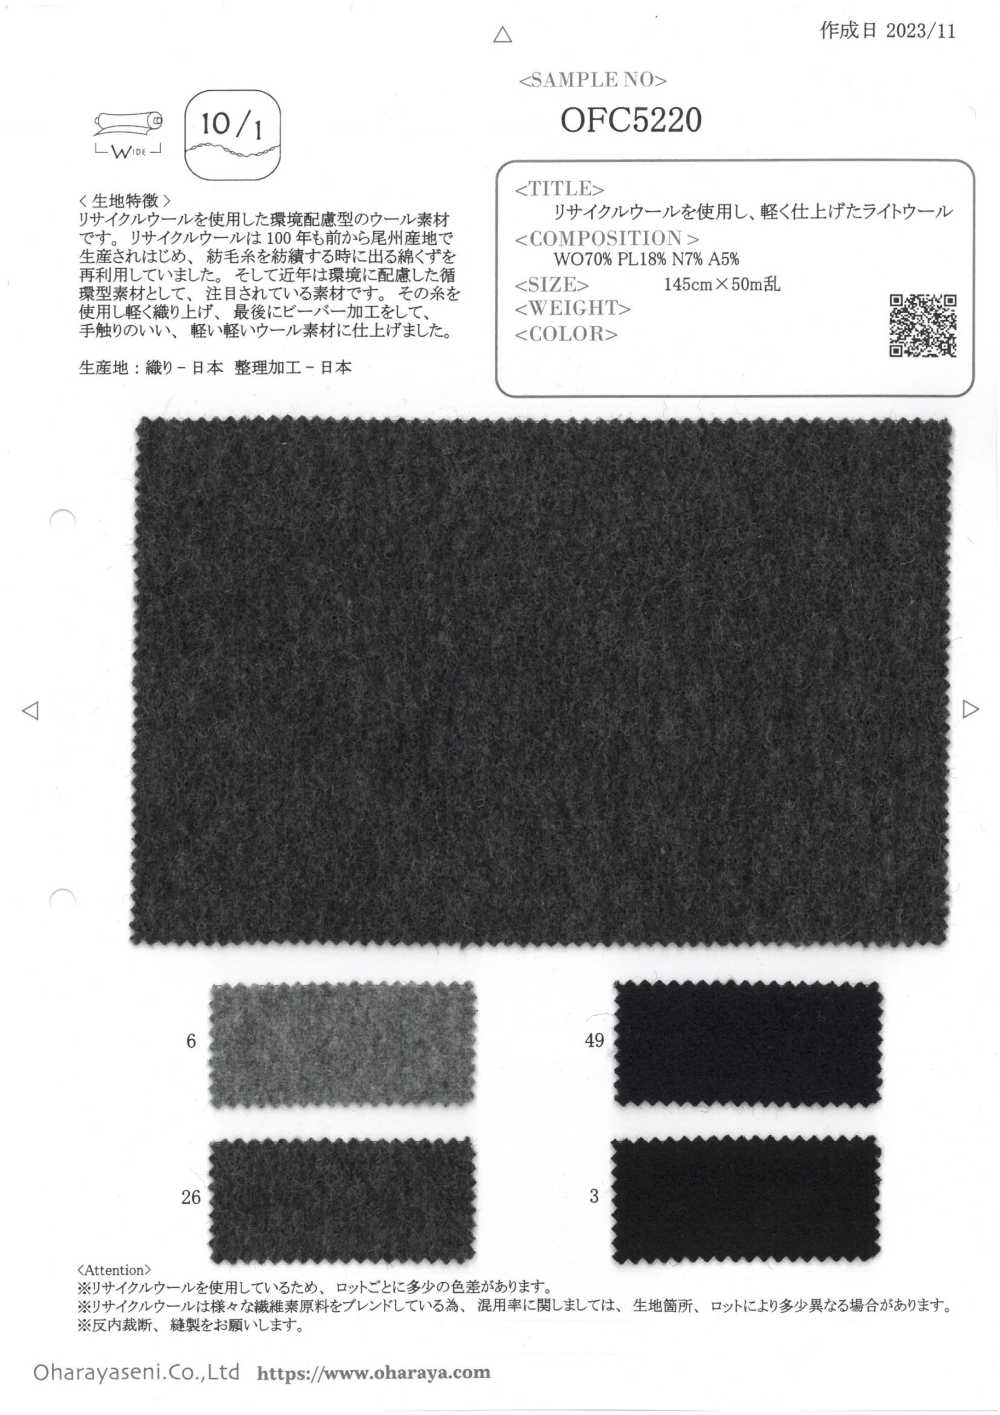 OFC5220 Leichte Wolle Aus Recycelter Wolle Mit Leichtem Finish[Textilgewebe] Oharayaseni